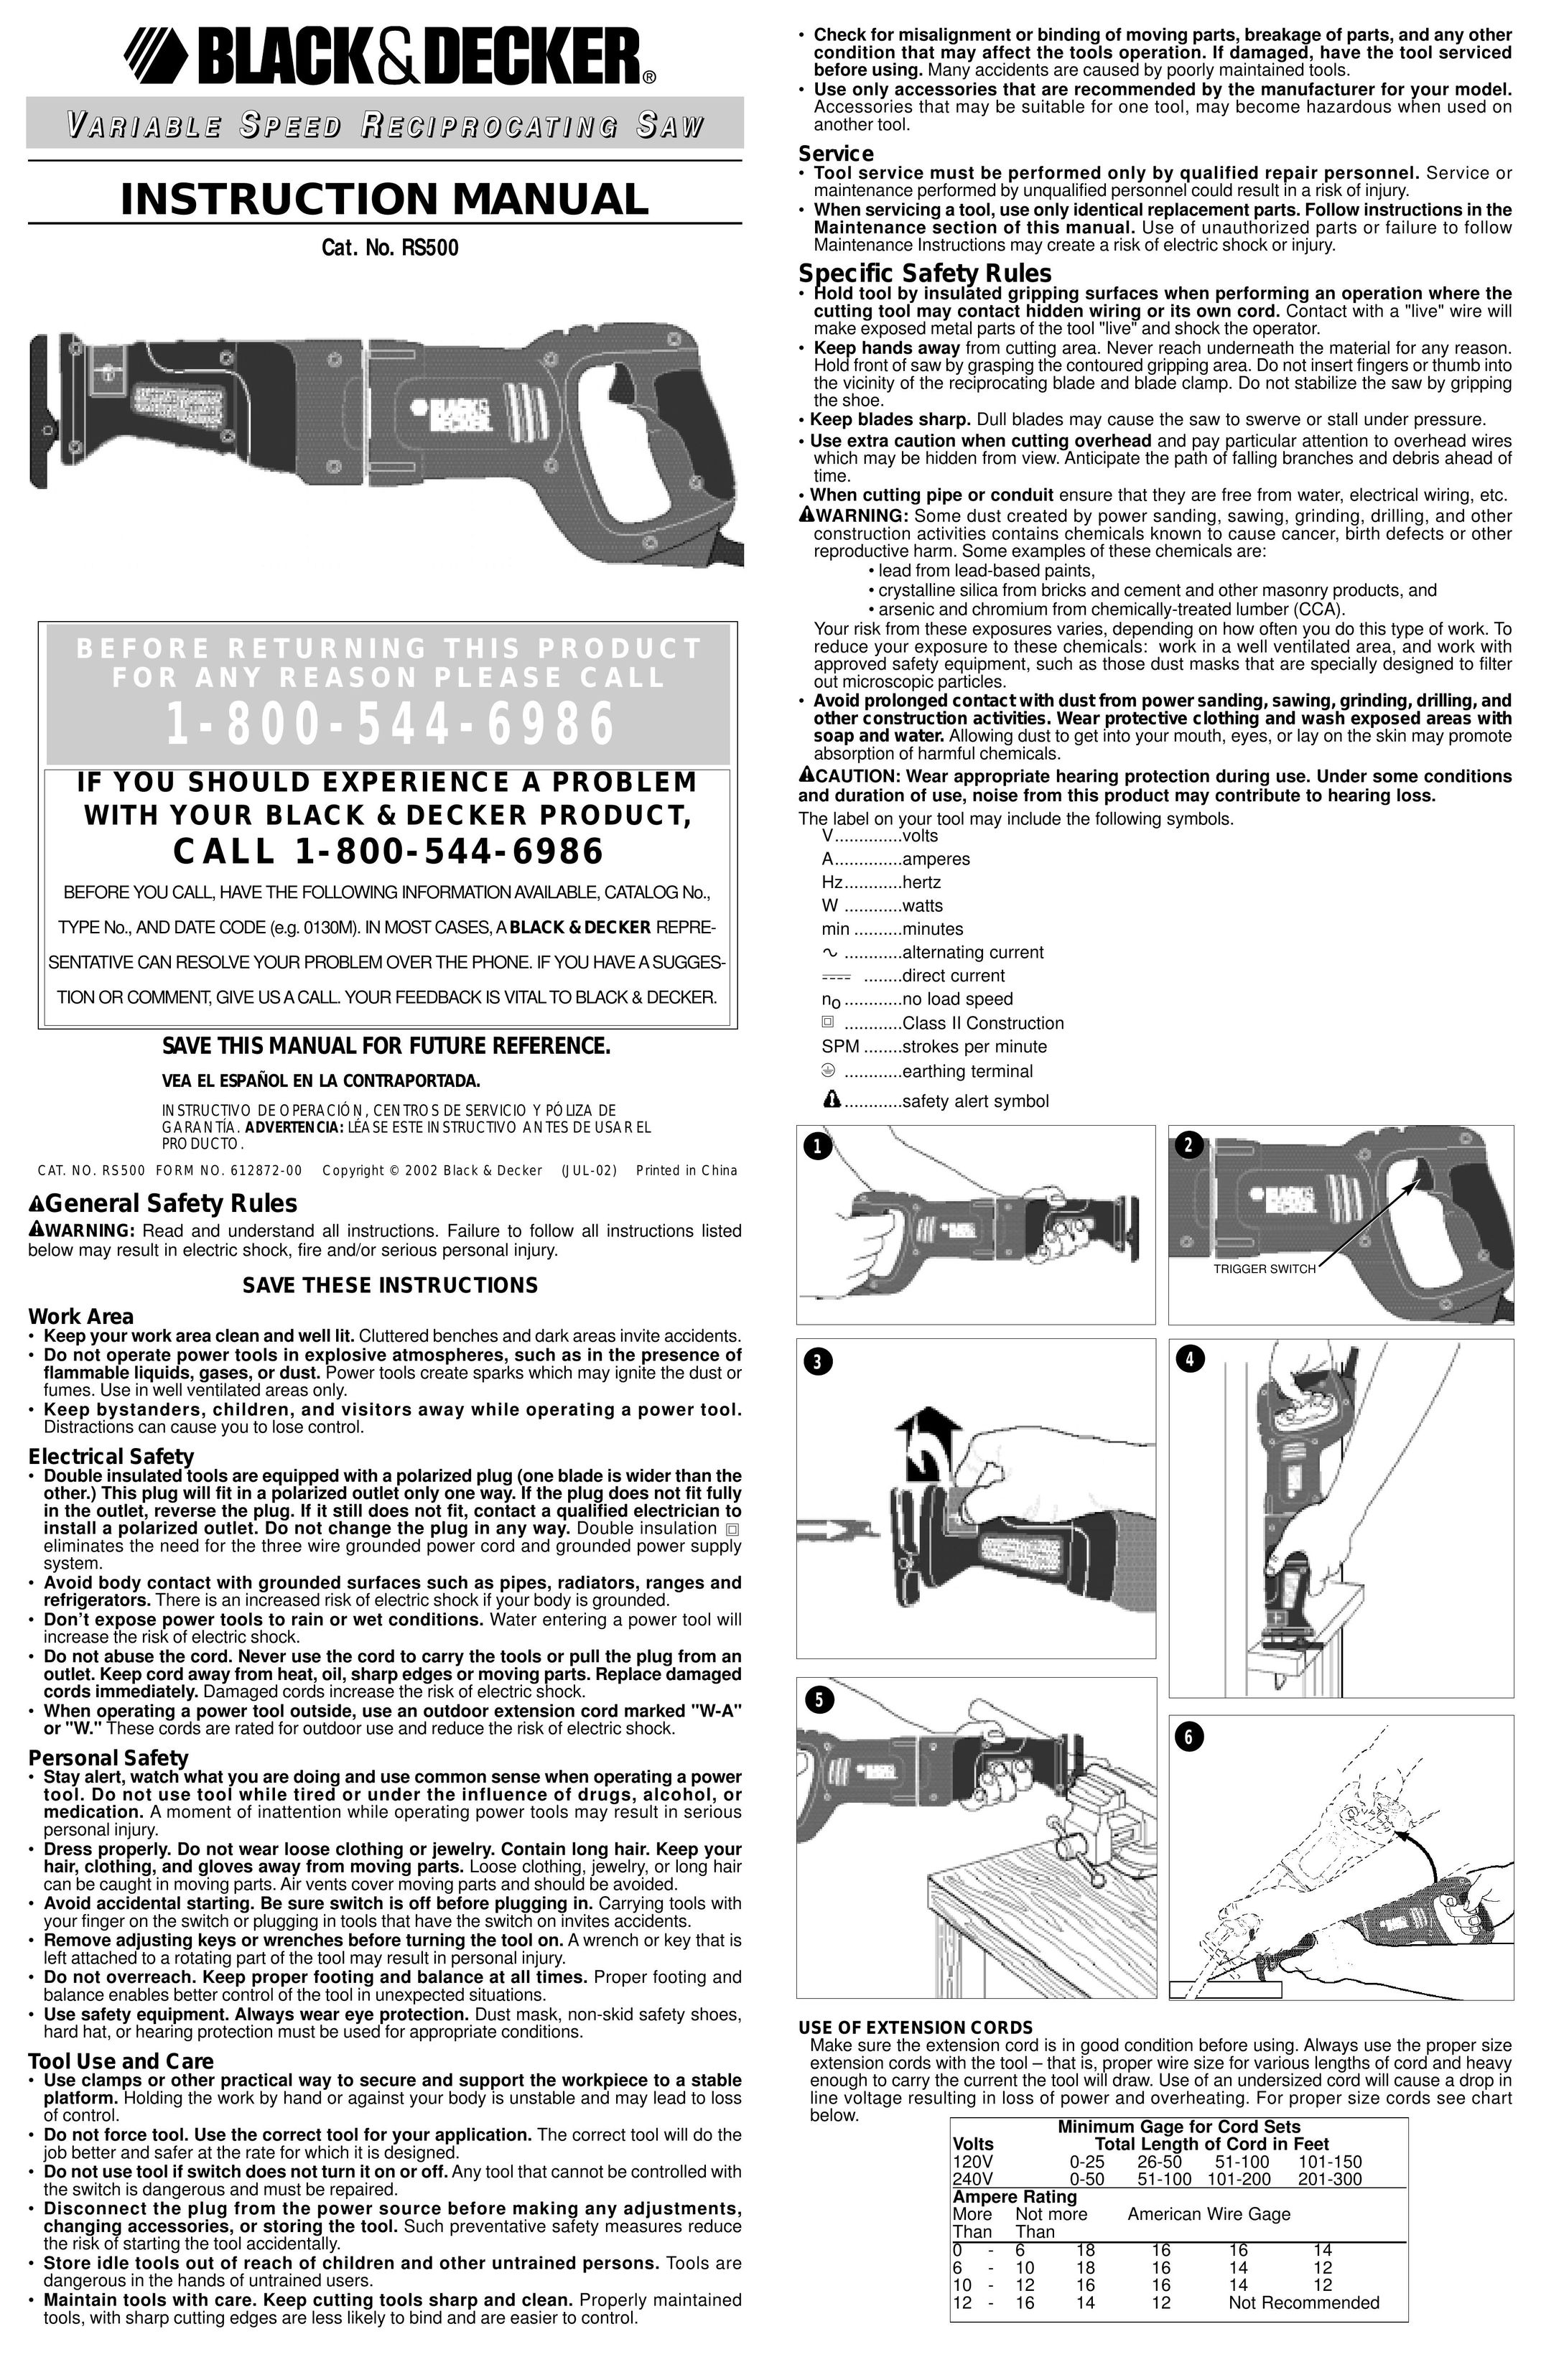 Black & Decker 612872-00 Saw User Manual